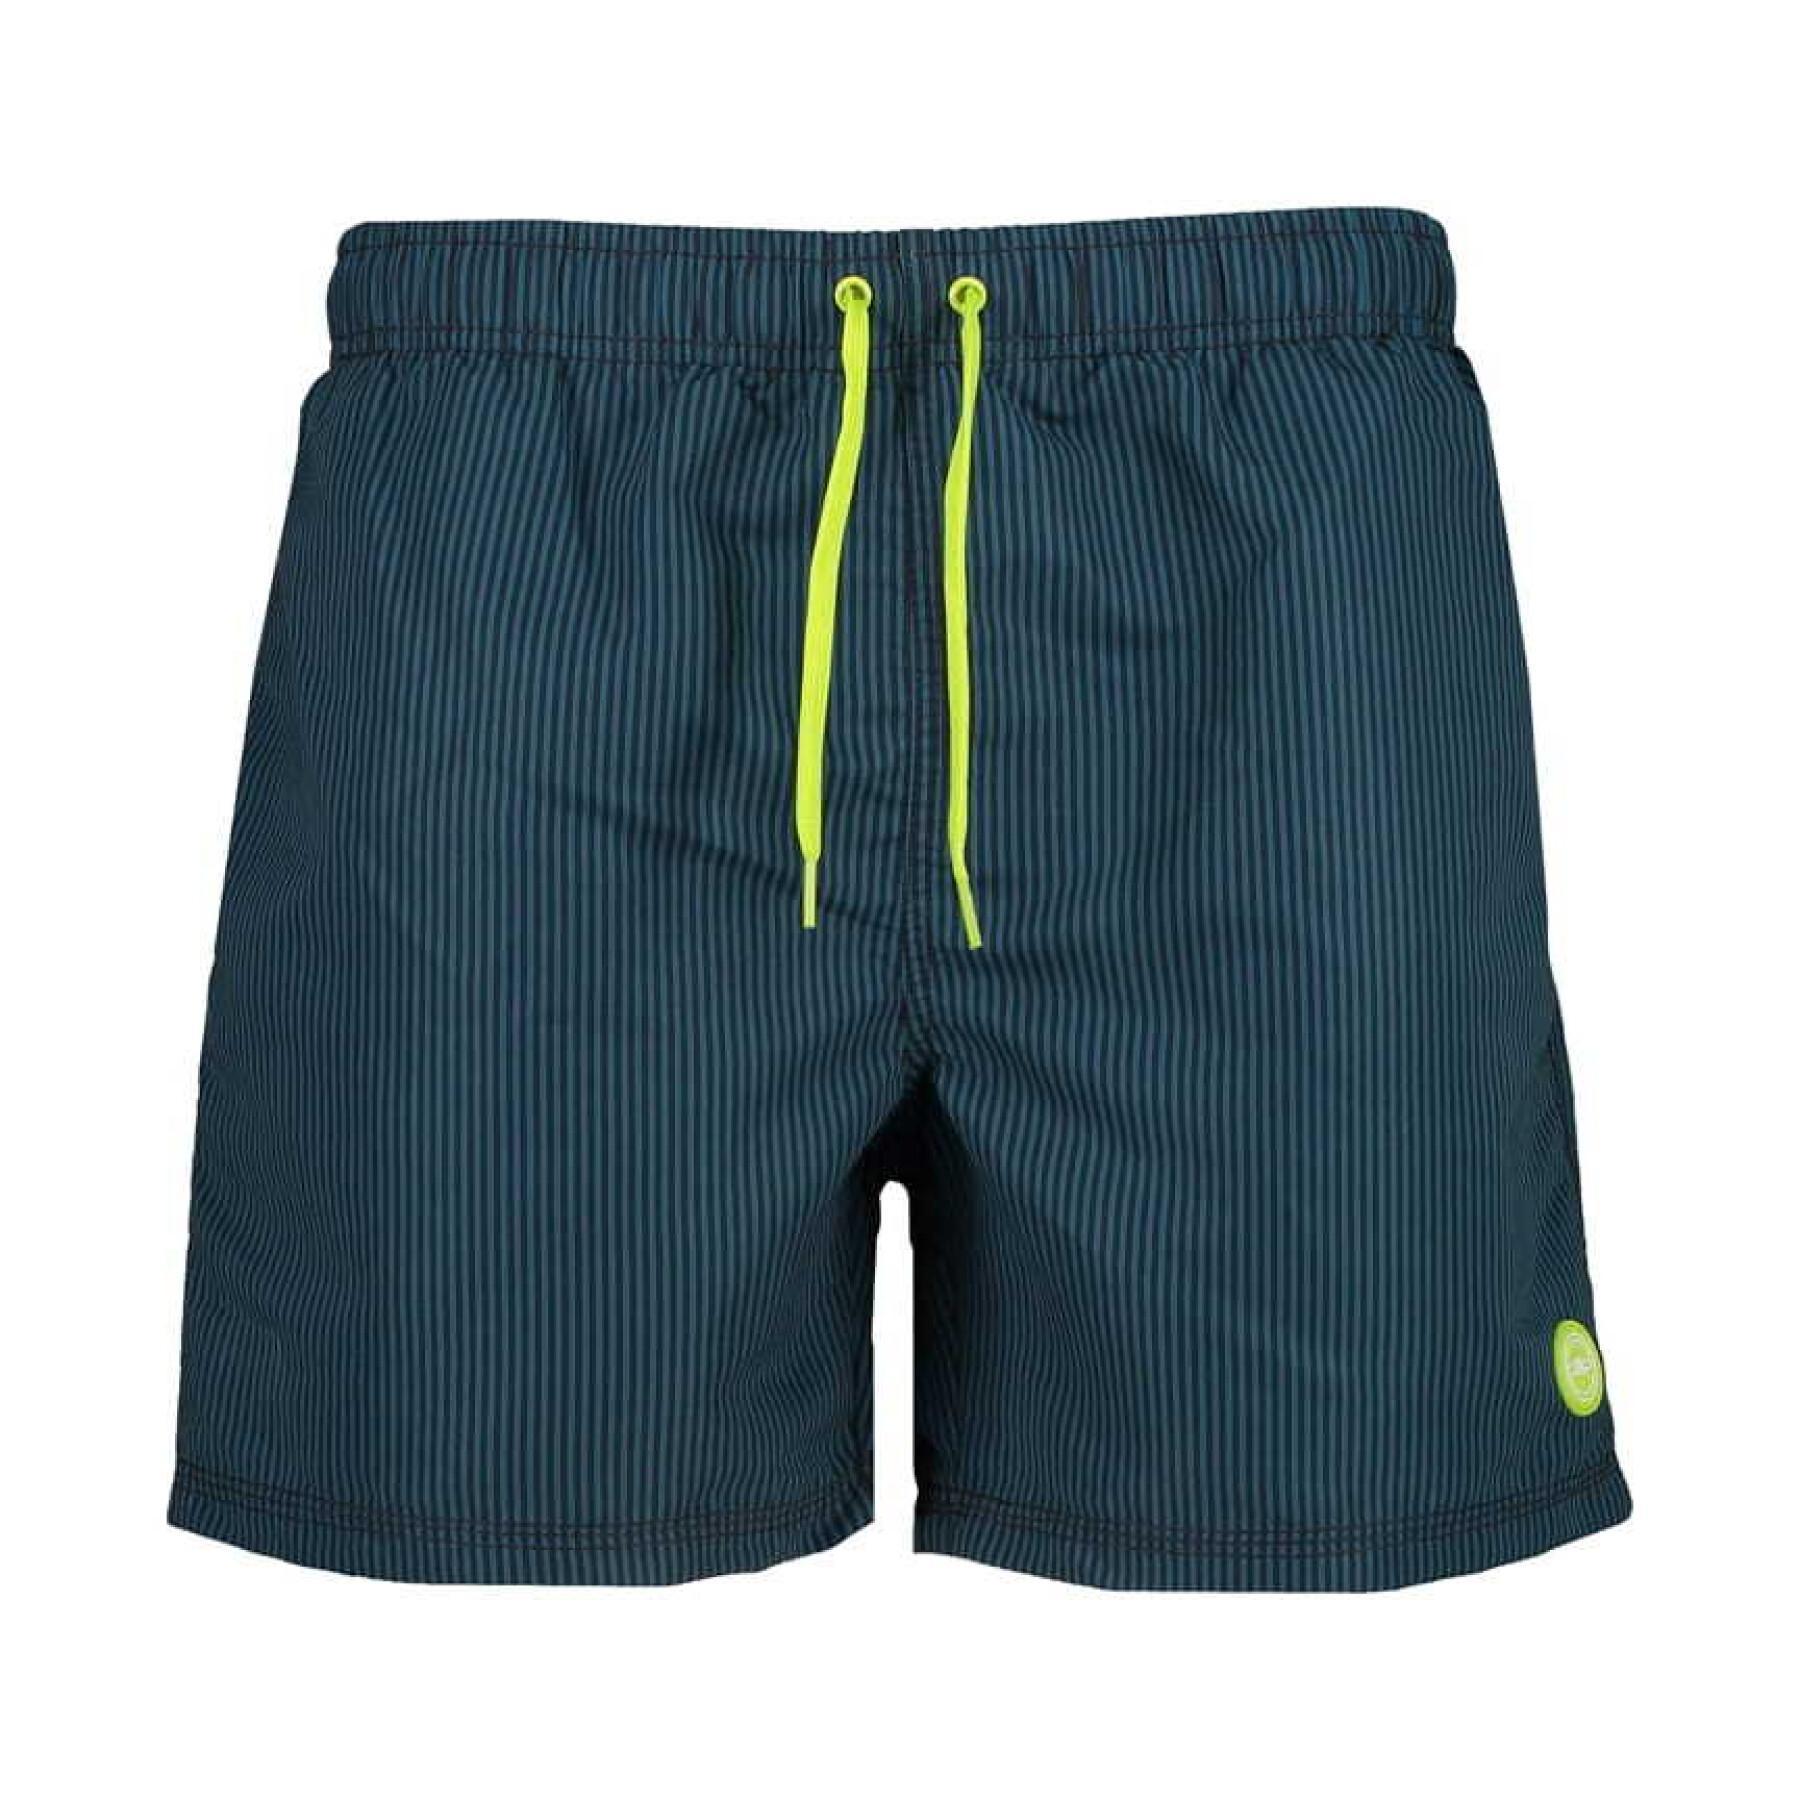 Herren Badeshorts Shorts